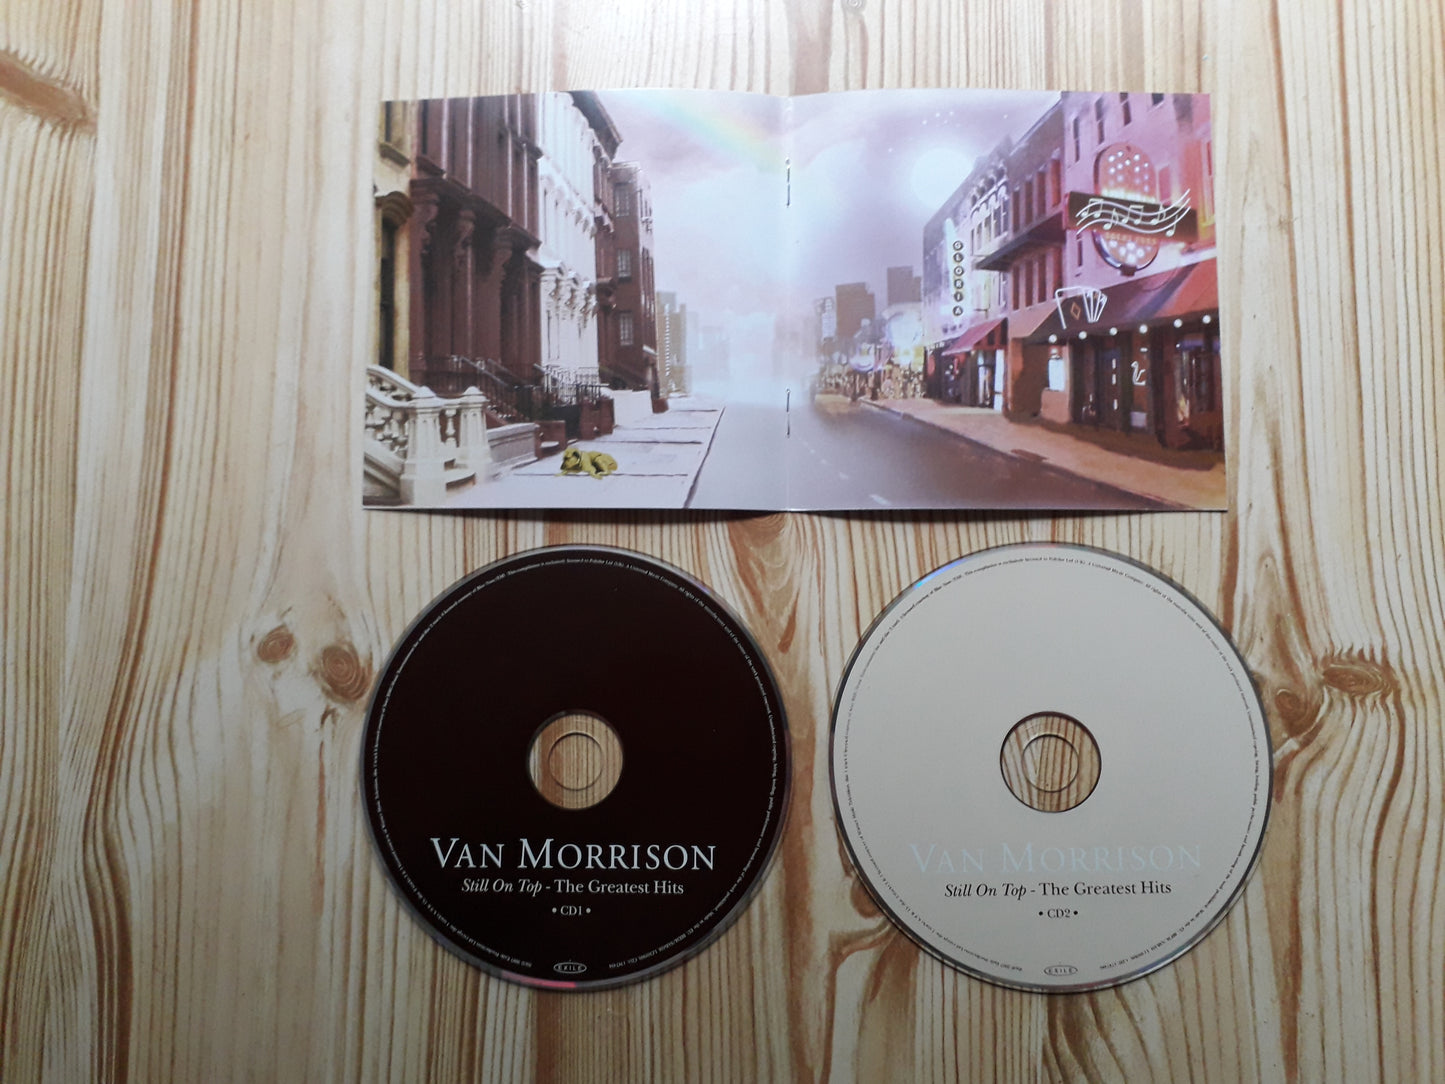 Van Morrison-Still On Top-The Greatest Hits Dbl CD (1747483)